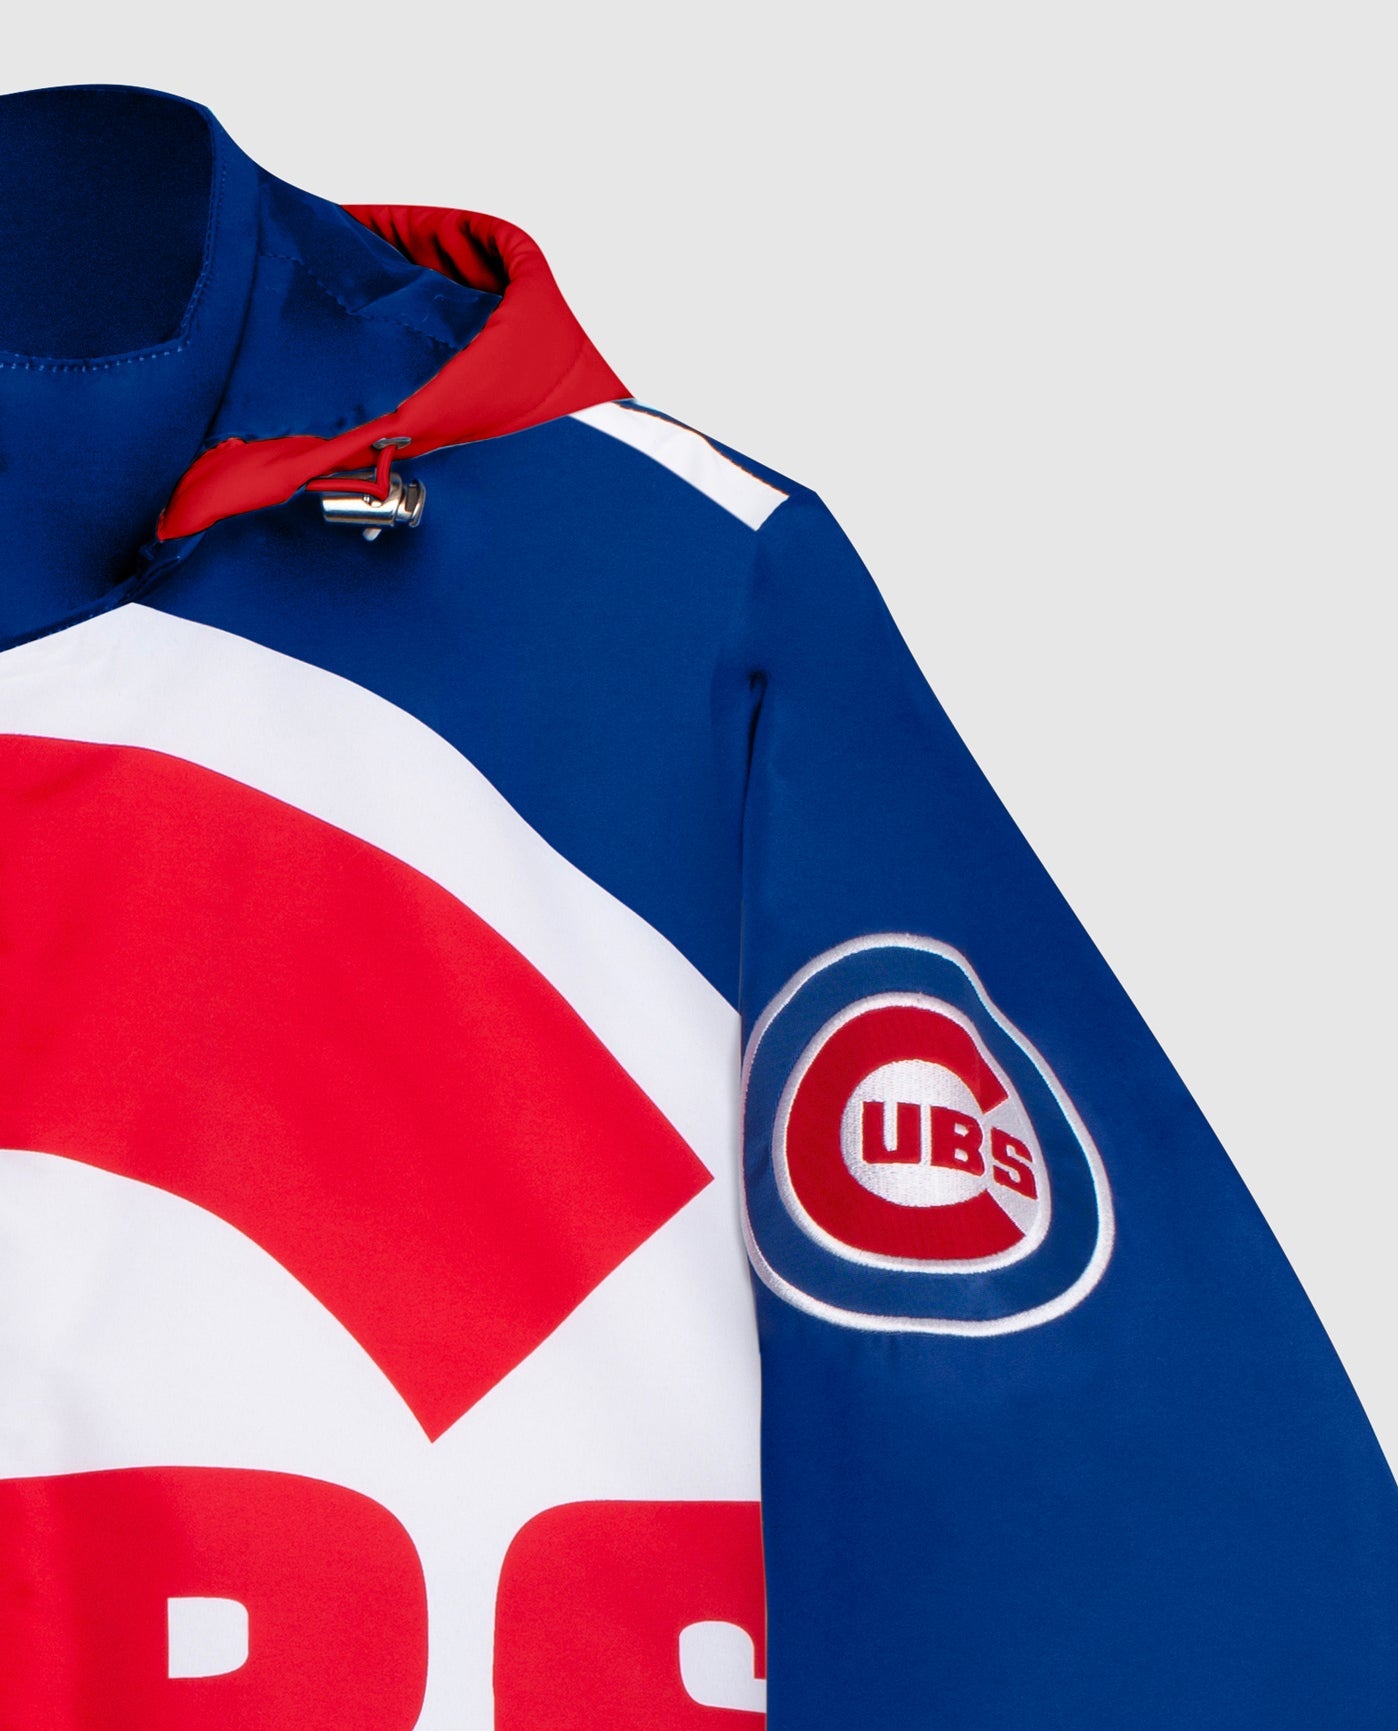 Starter Chicago Cubs Hooded Nylon Full-Zip Jacket M / Cubs Blue Mens Sportswear